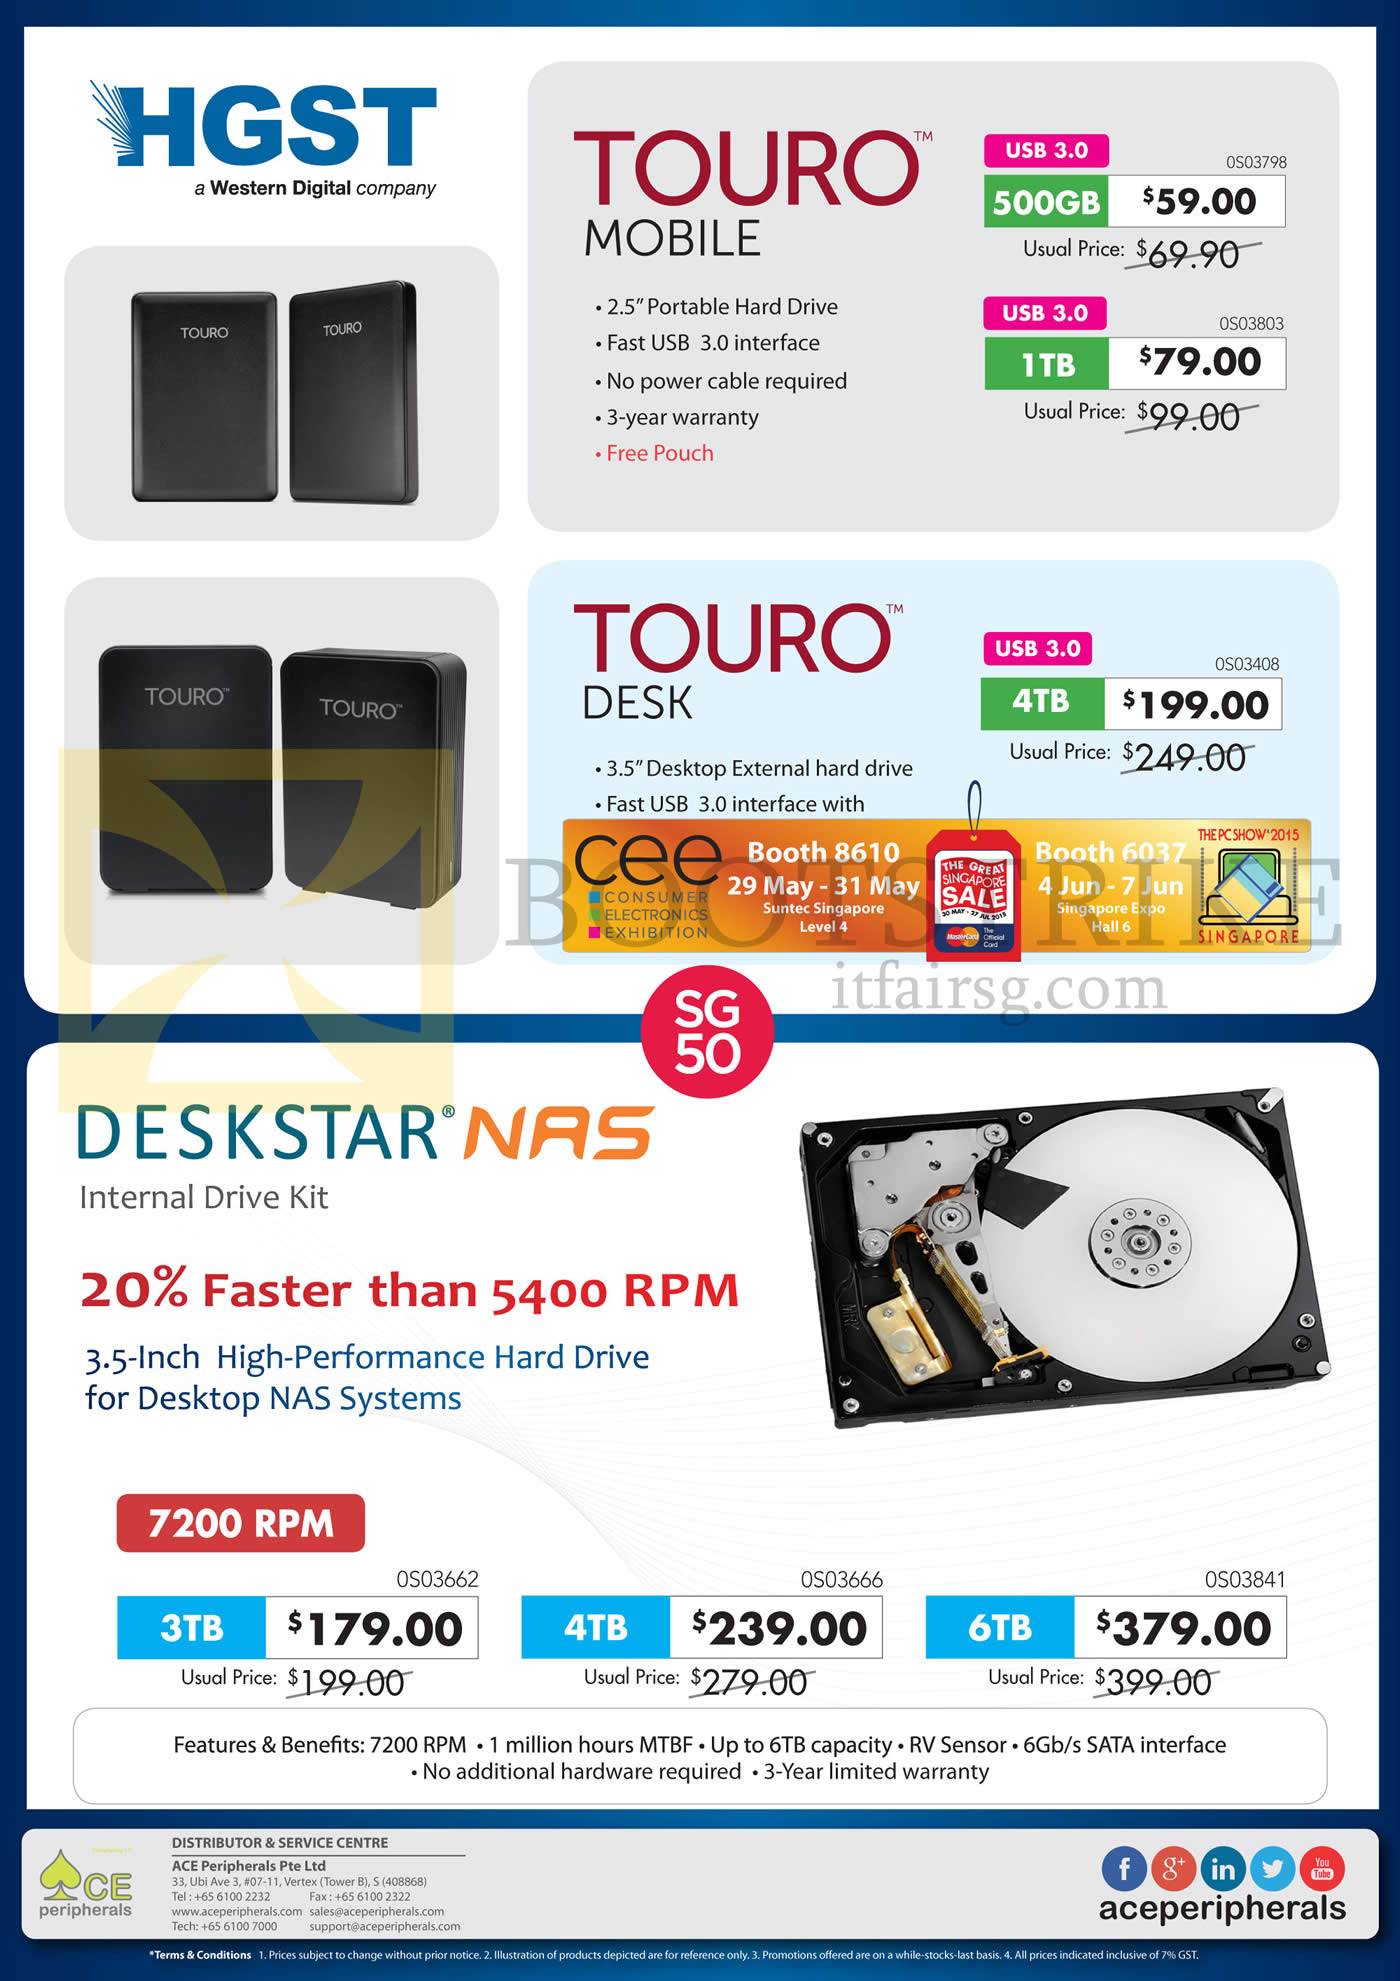 PC SHOW 2015 price list image brochure of Ace Peripherals External Storage Drive HGST Touro Mobile 500GB, 1TB, Desk, Deskstar NAS Internal HDD 3TB 4TB 6TB